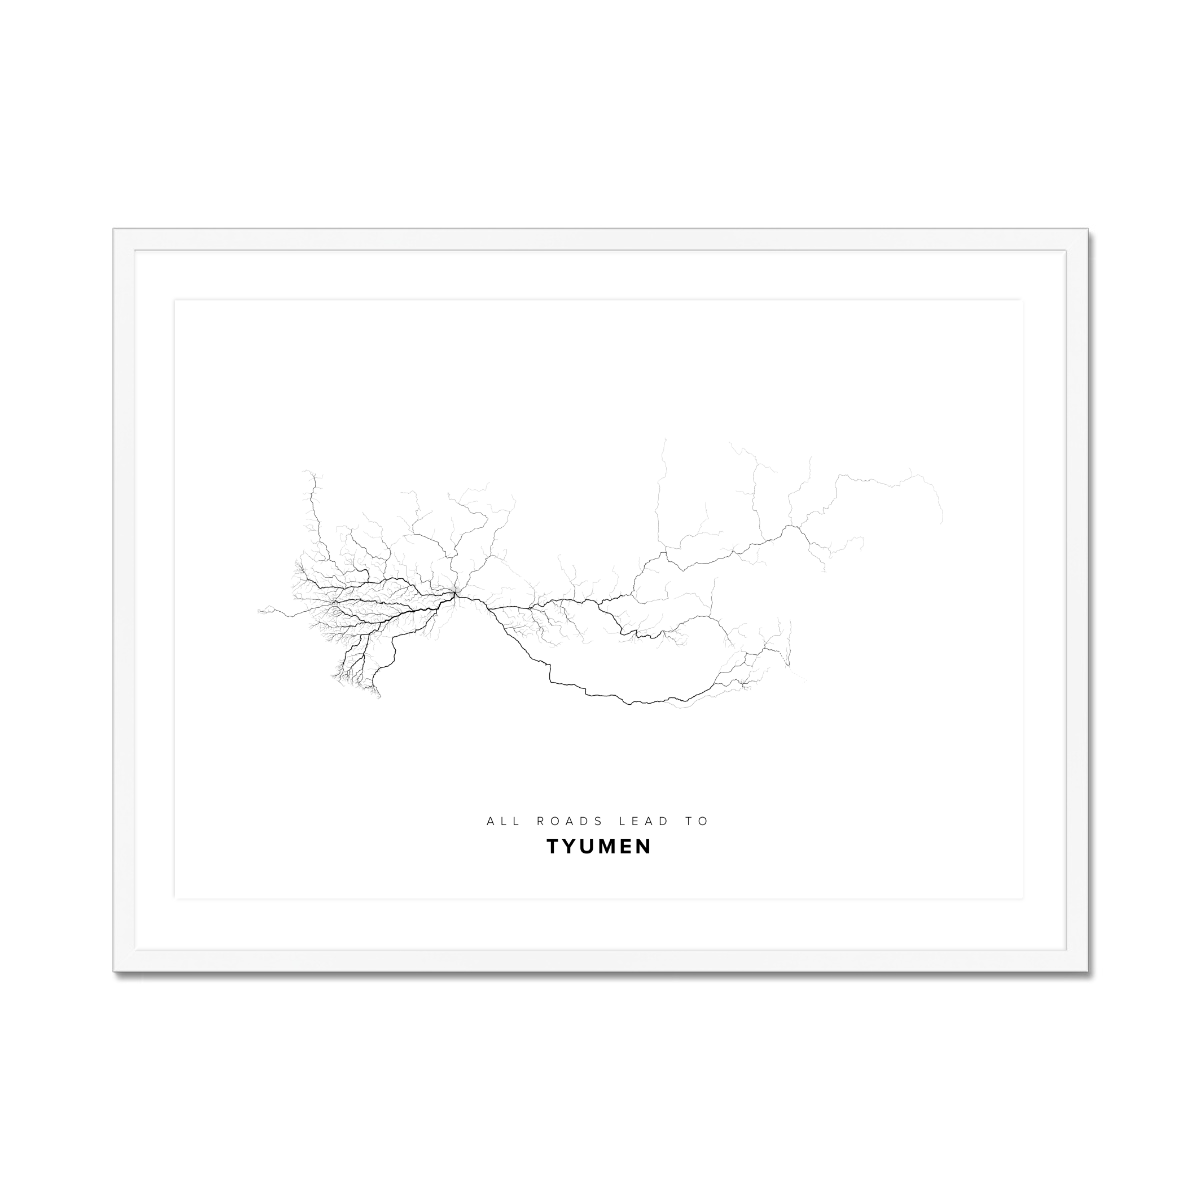 All roads lead to Tyumen (Russian Federation) Fine Art Map Print